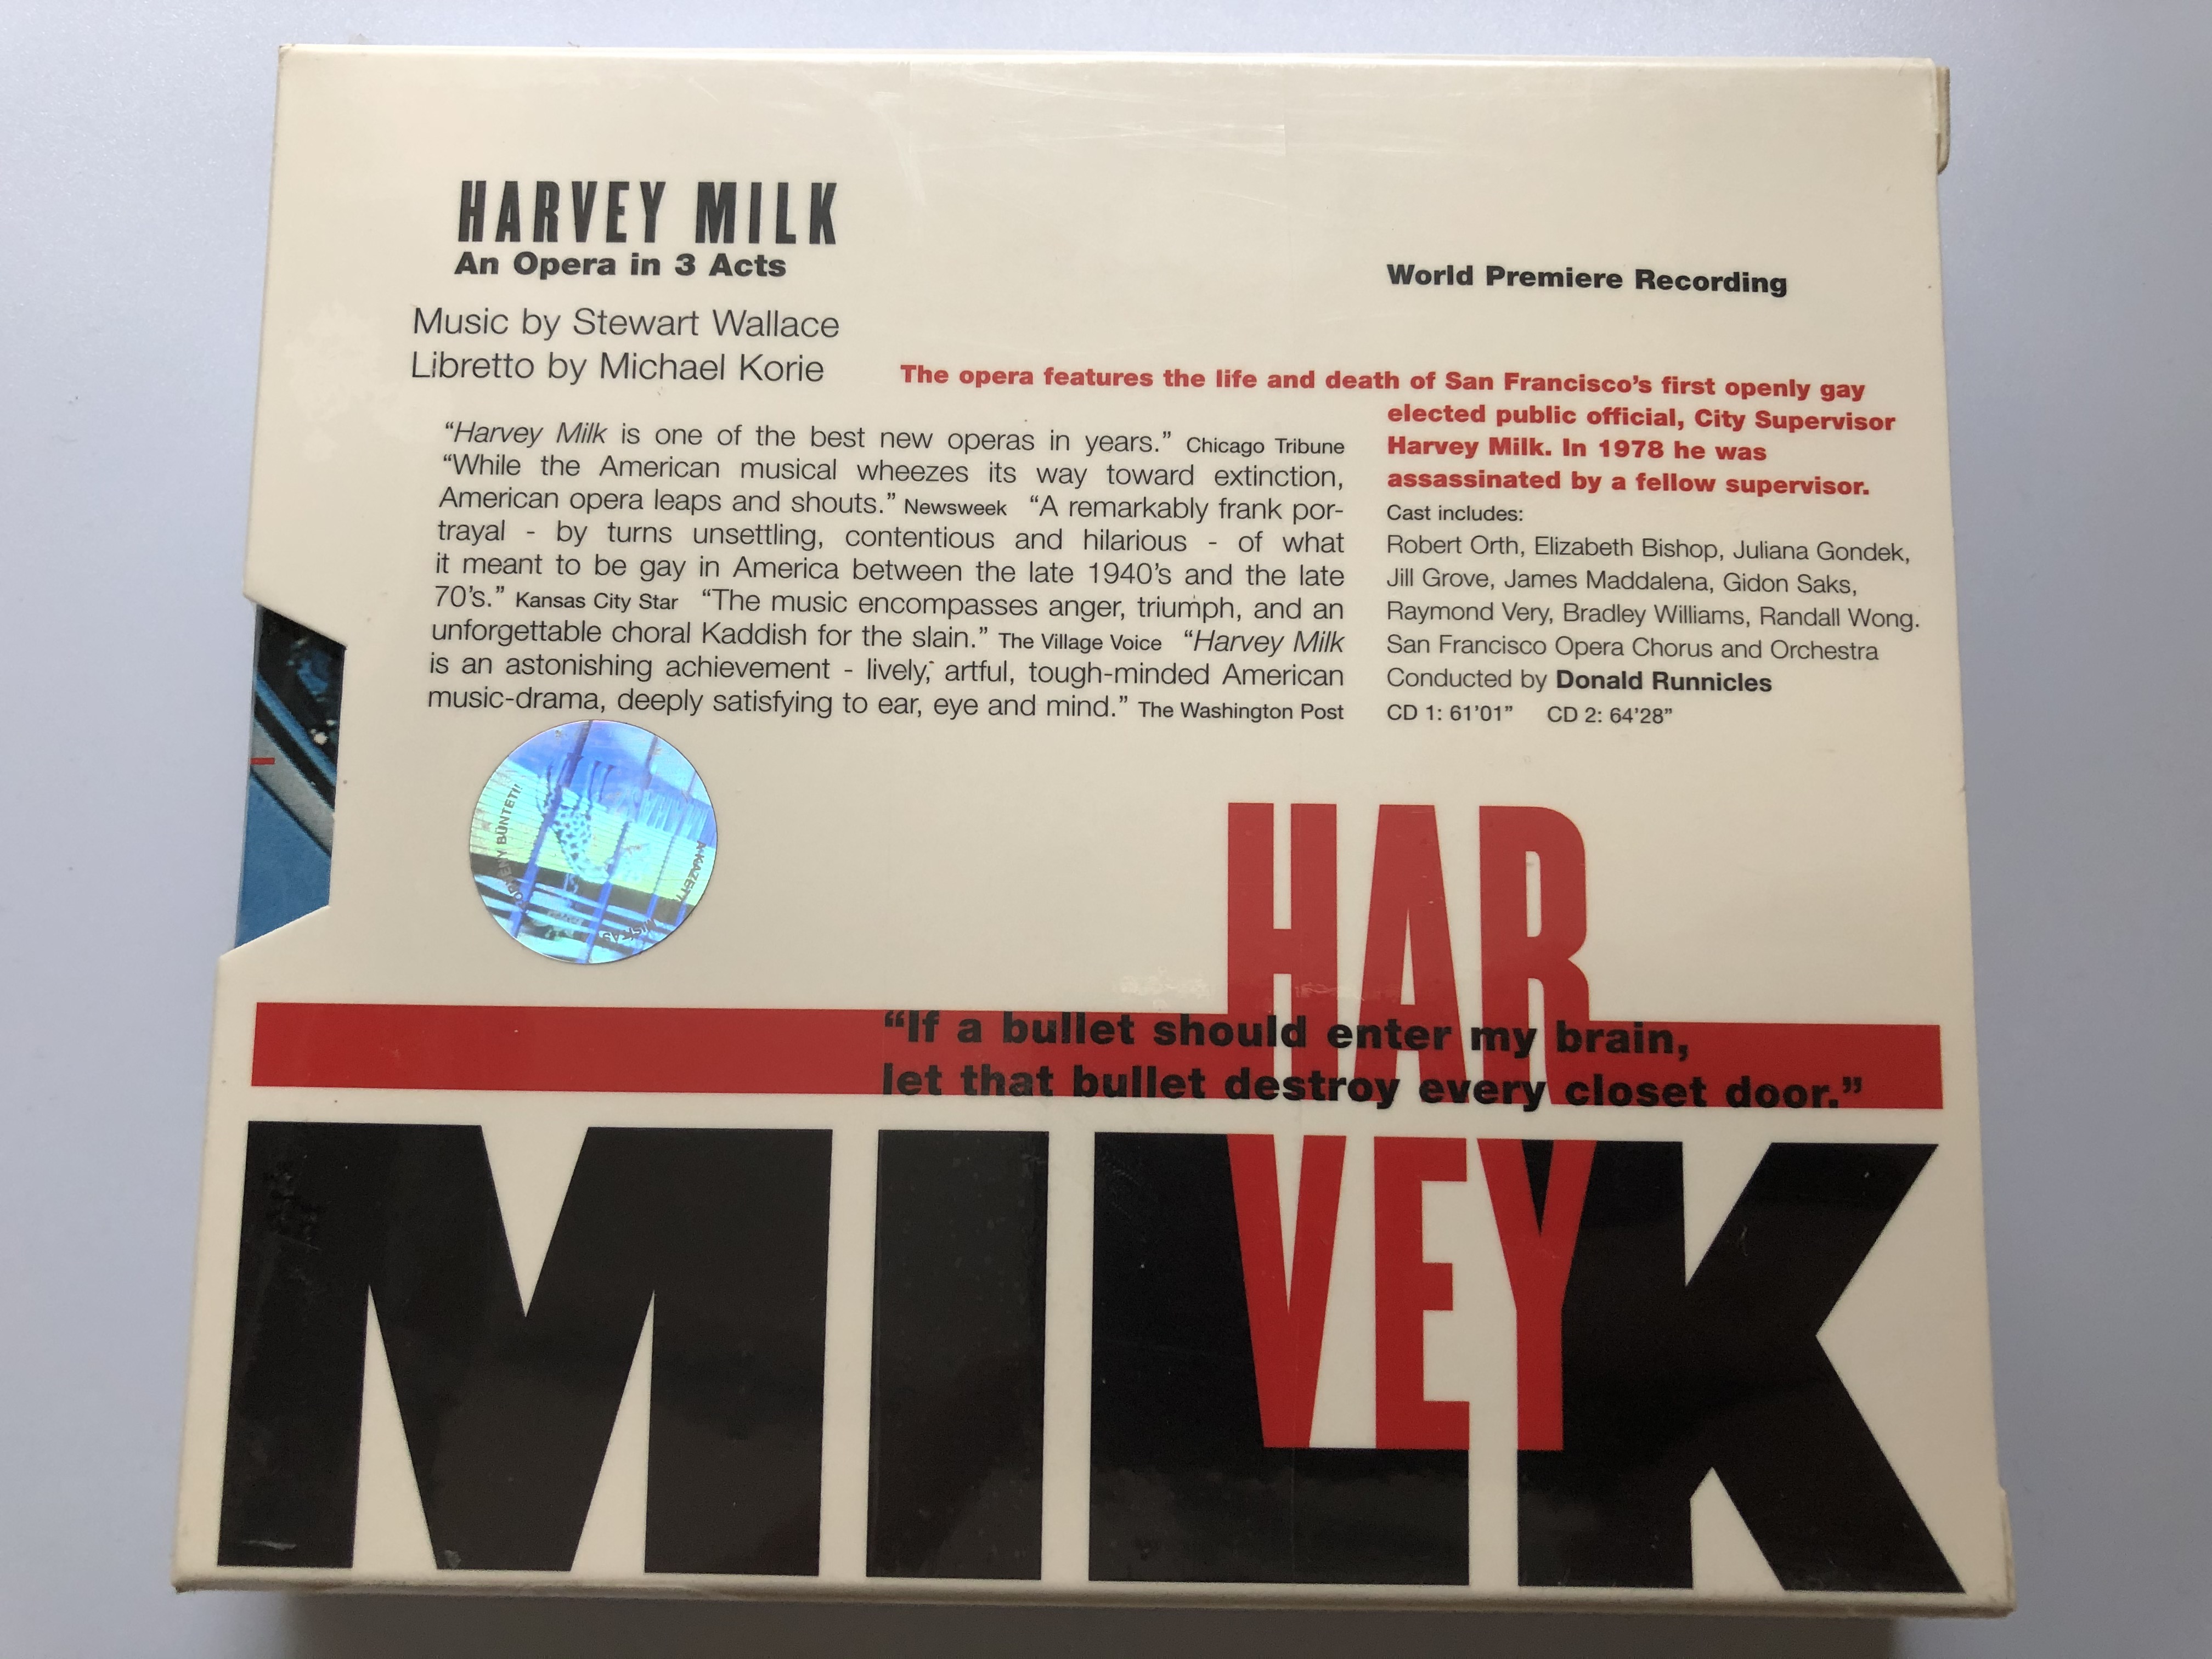 harvey-milk-stewart-wallace-michael-korie-san-francisco-opera-donald-runnicles-teldec-2x-audio-cd-0630-15856-2-2-.jpg